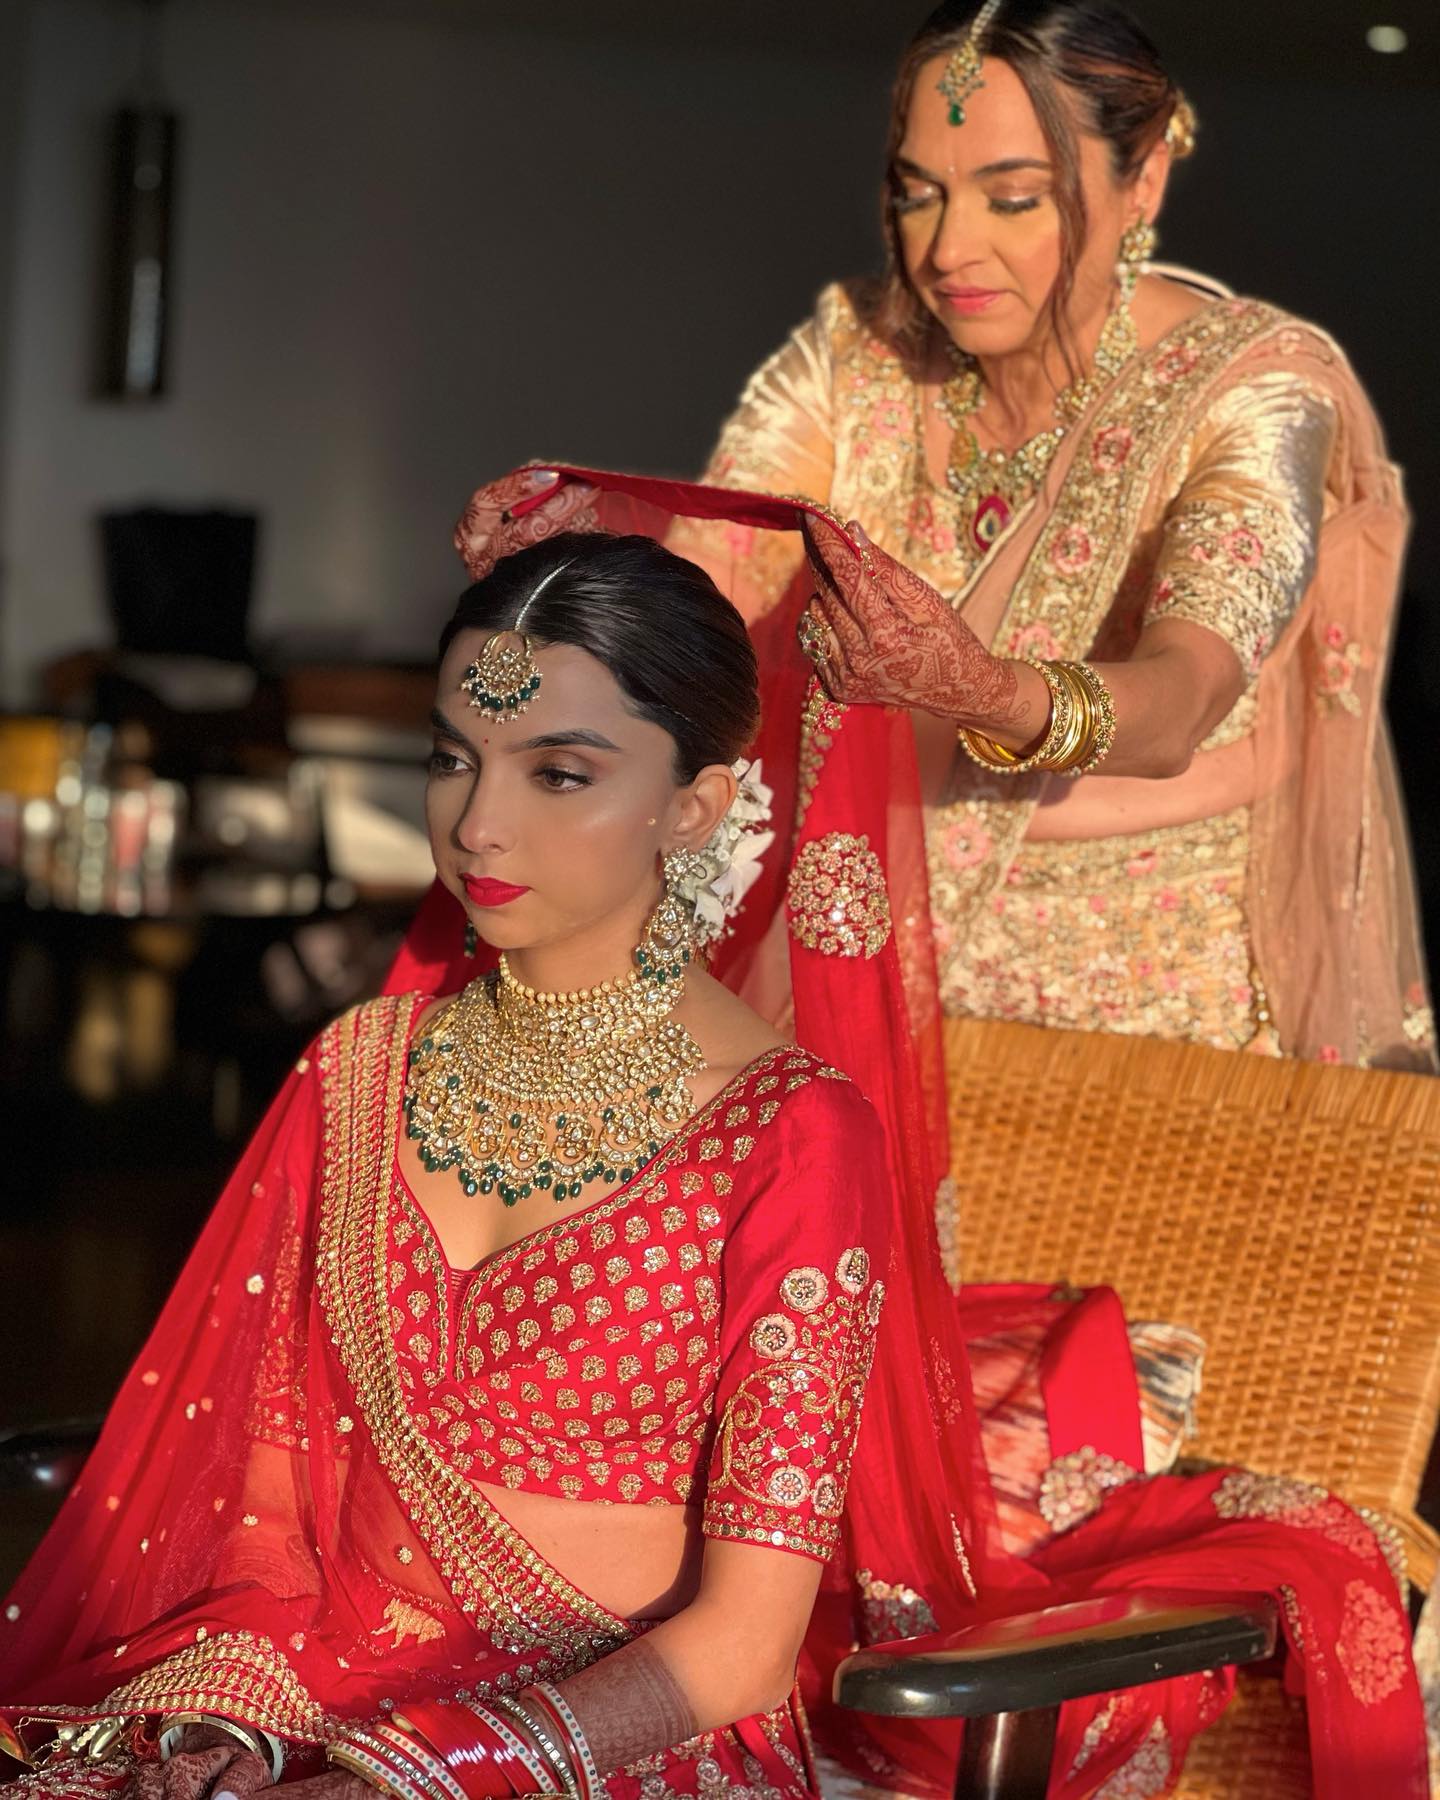 All The Details From Kiara Advani’s Sister Ishita’s Wedding